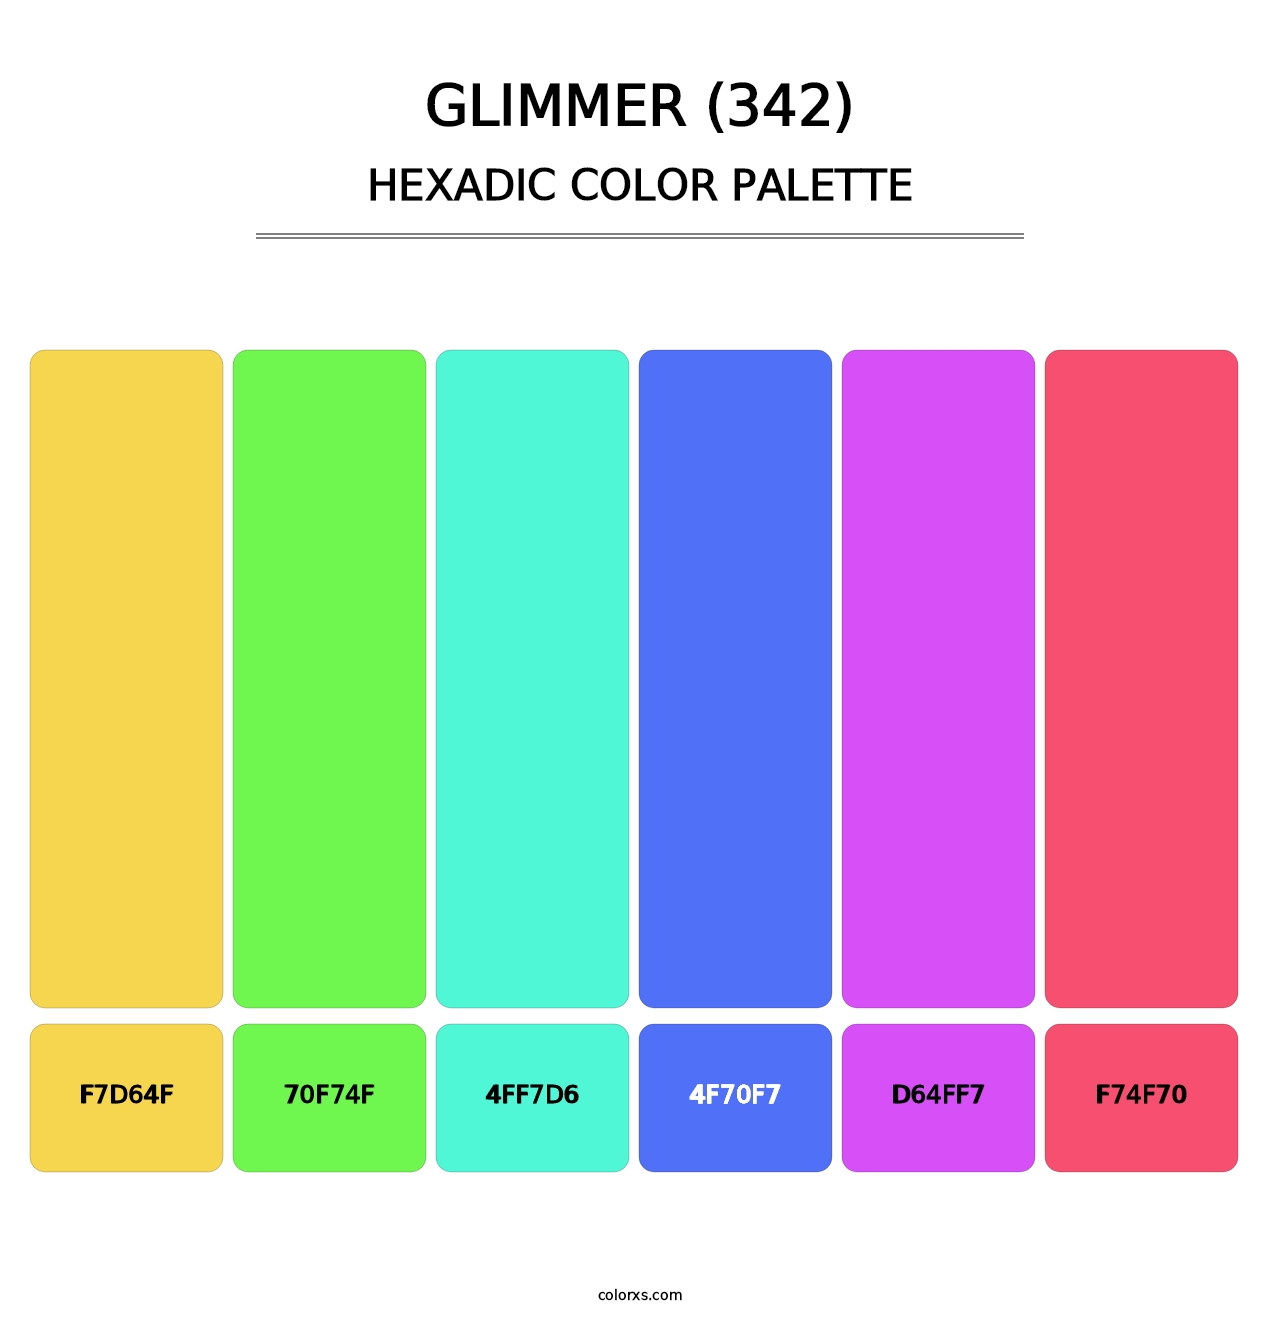 Glimmer (342) - Hexadic Color Palette